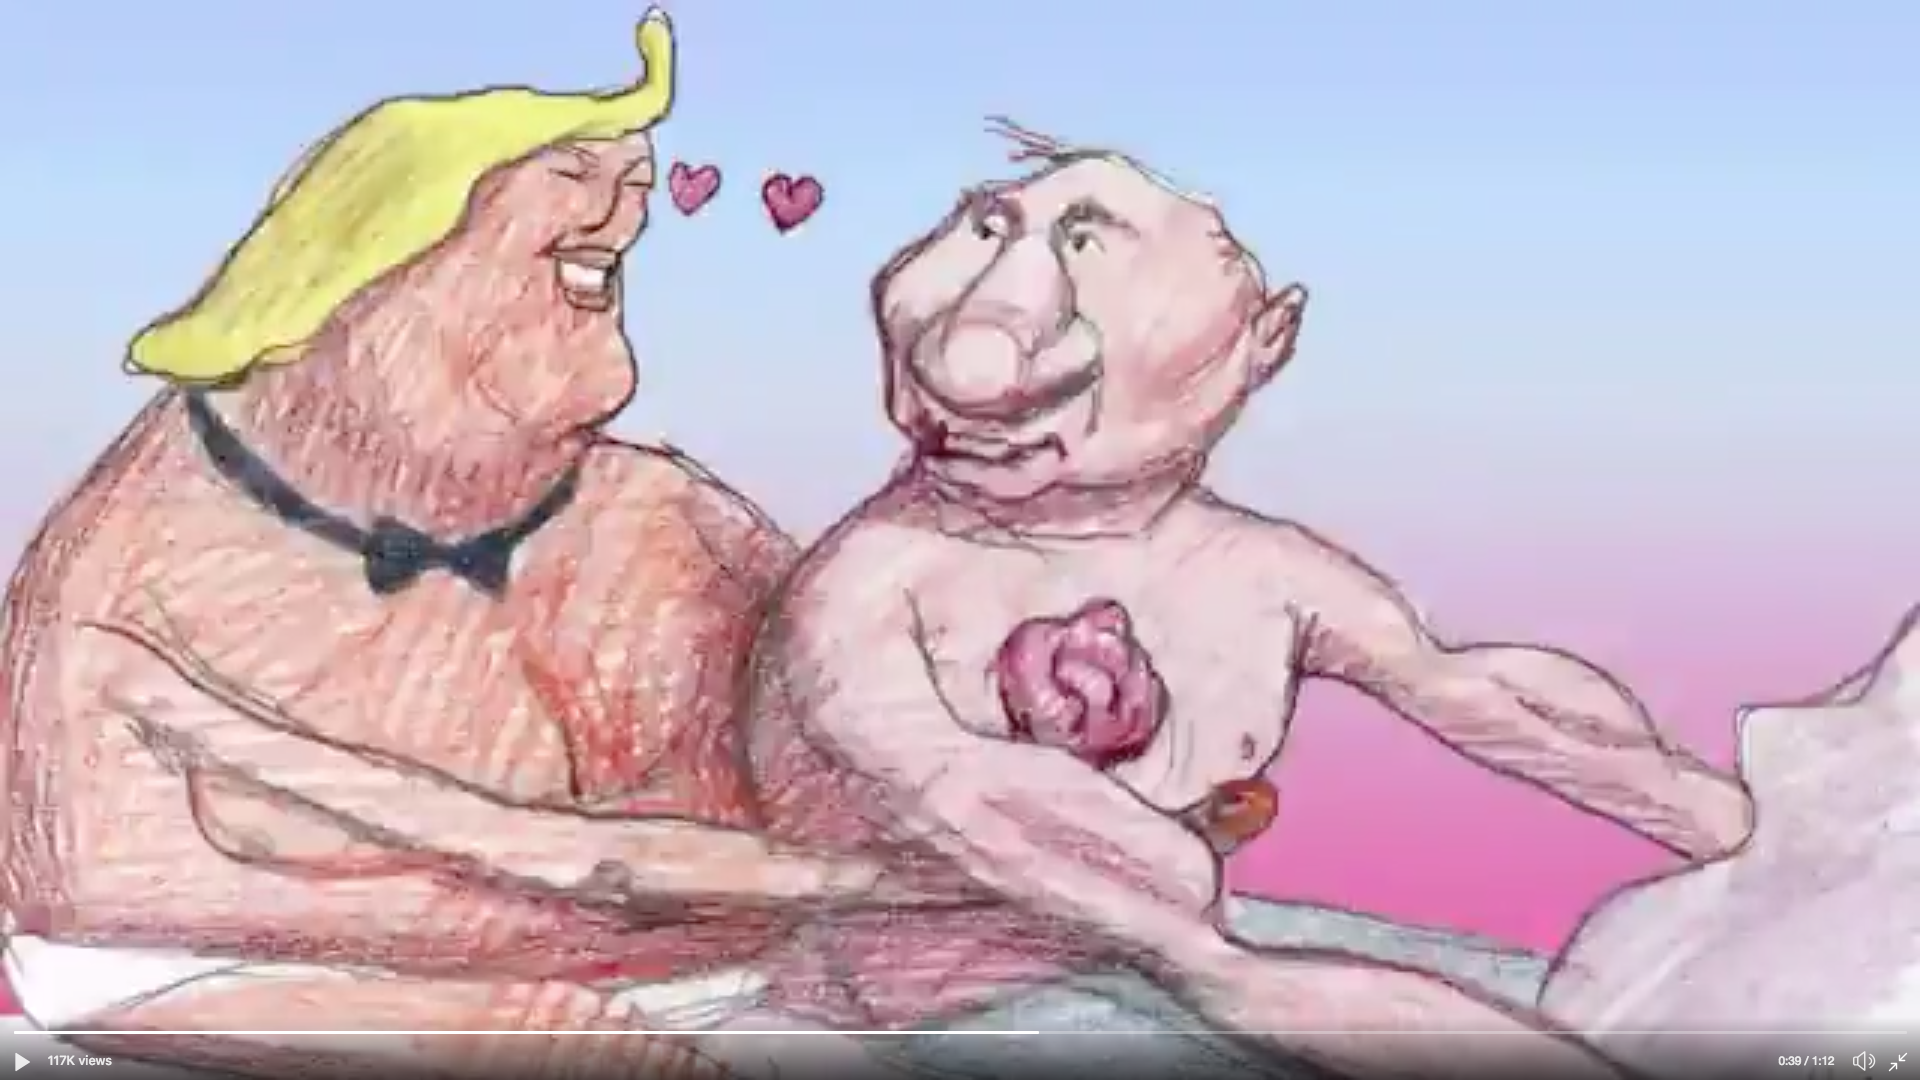 The New York Times envisions a Trump-Putin love affair in this salacious,  repulsive video cartoon